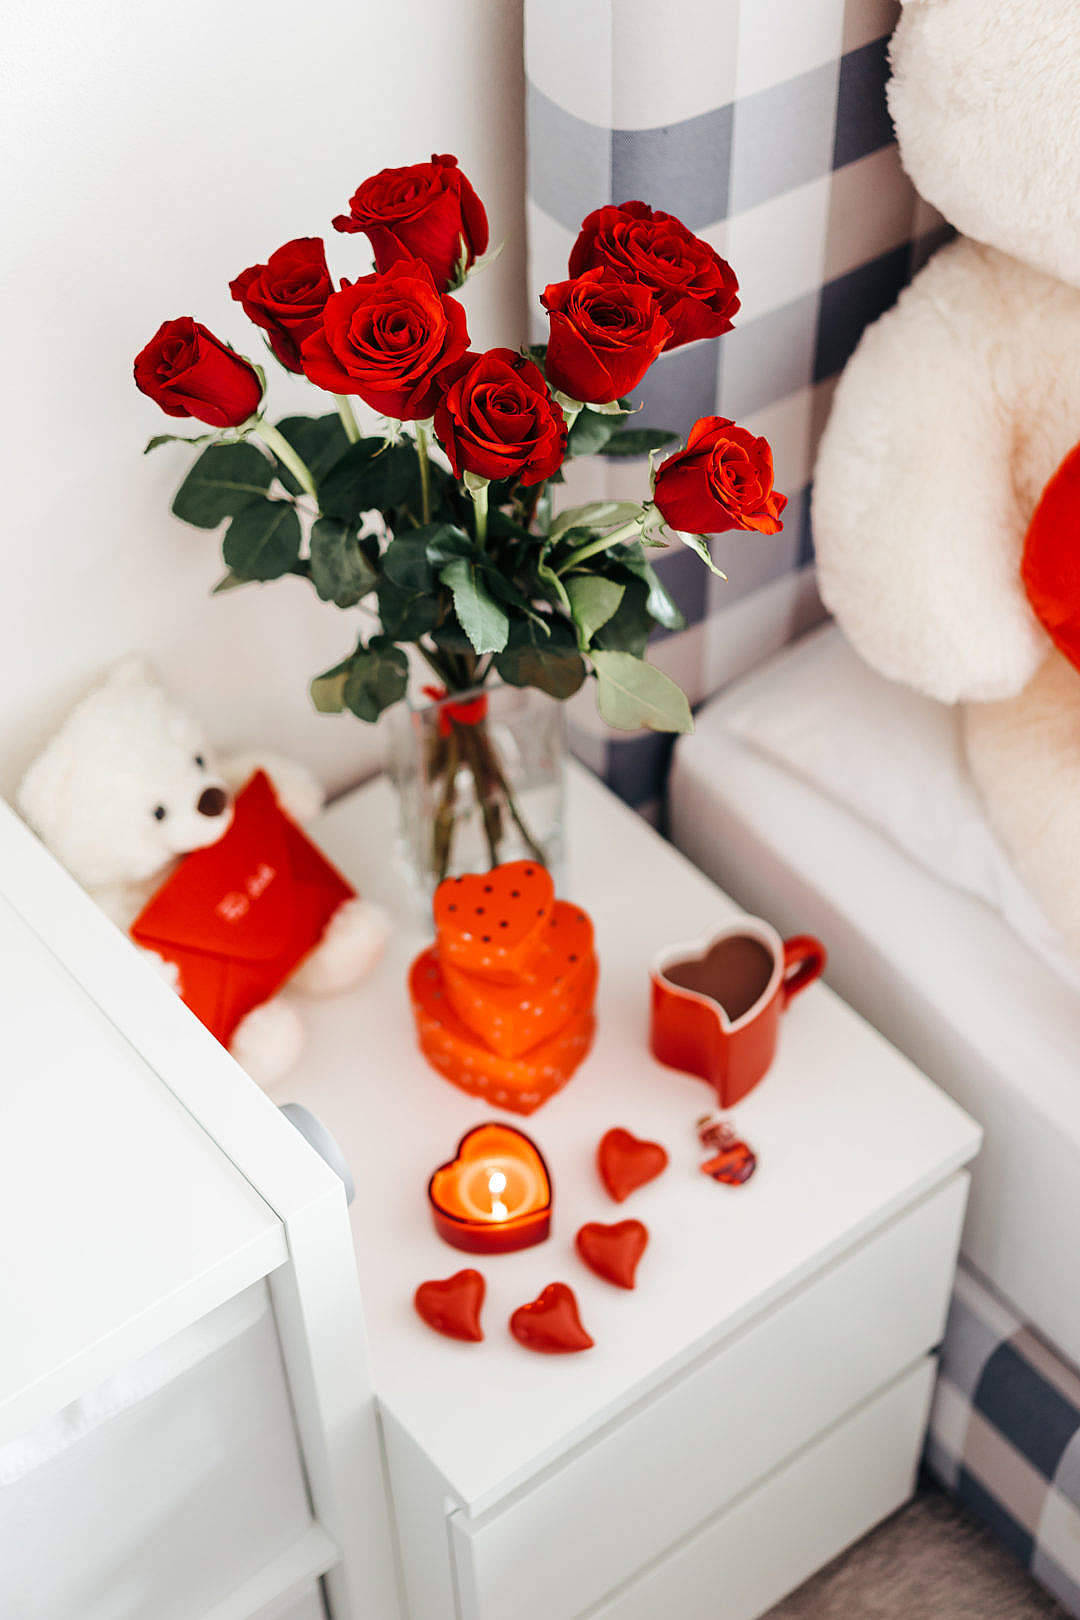 Romantic Love Flowers Roses On Nightstand Wallpaper